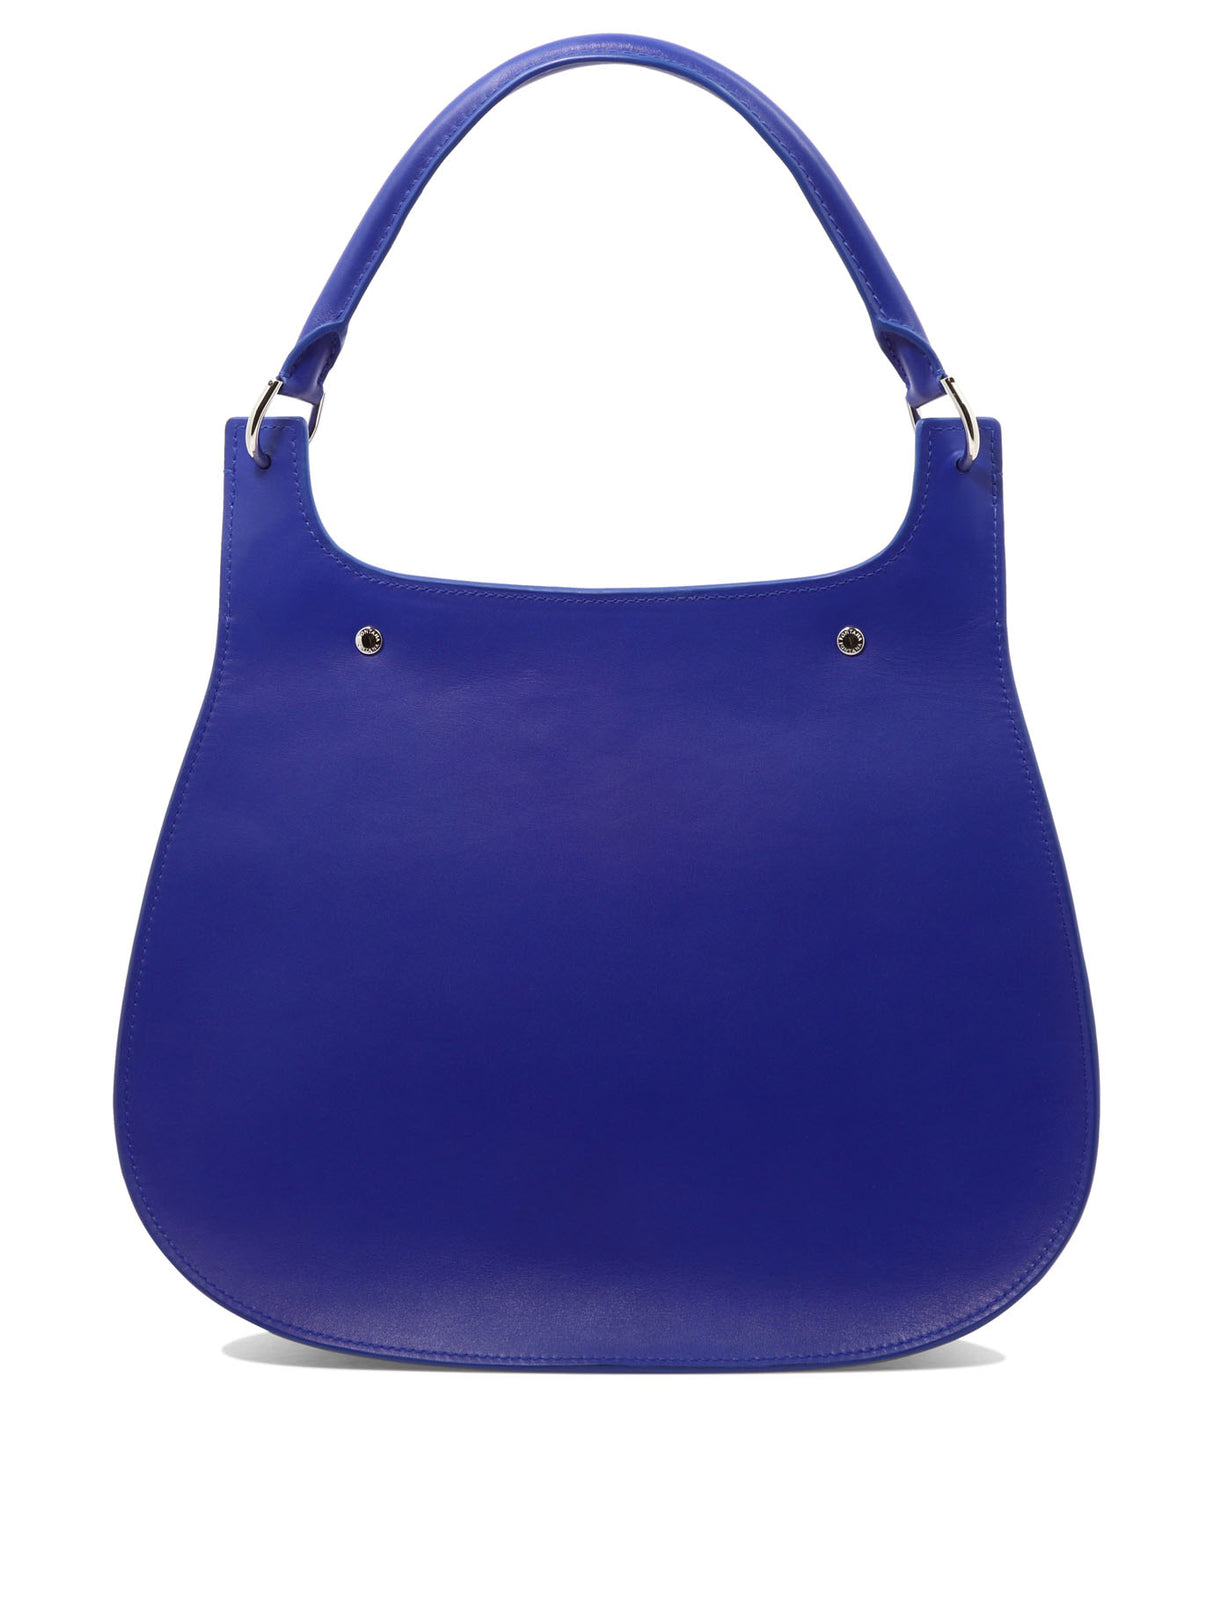 FONTANA MILANO 1915 Blue Leather Shoulder Handbag for Women